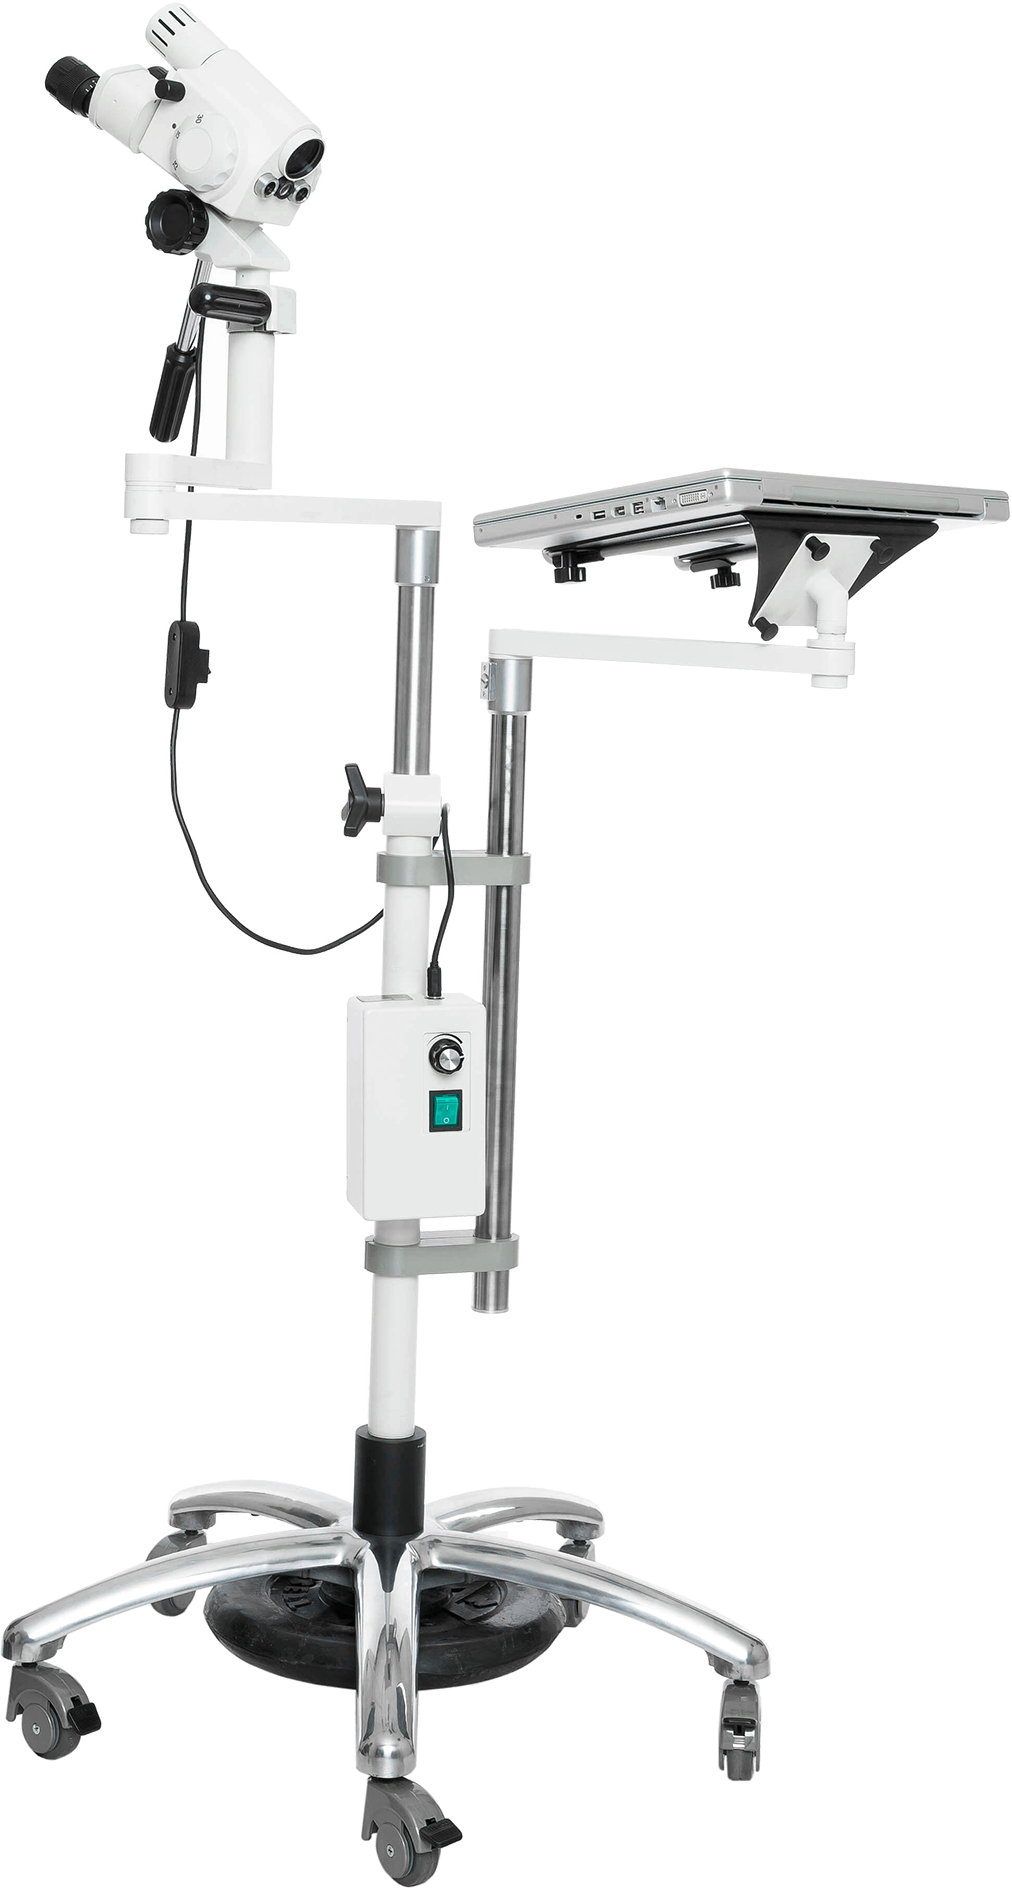 KNB-04 LED-Zenit binocular floor colposcope